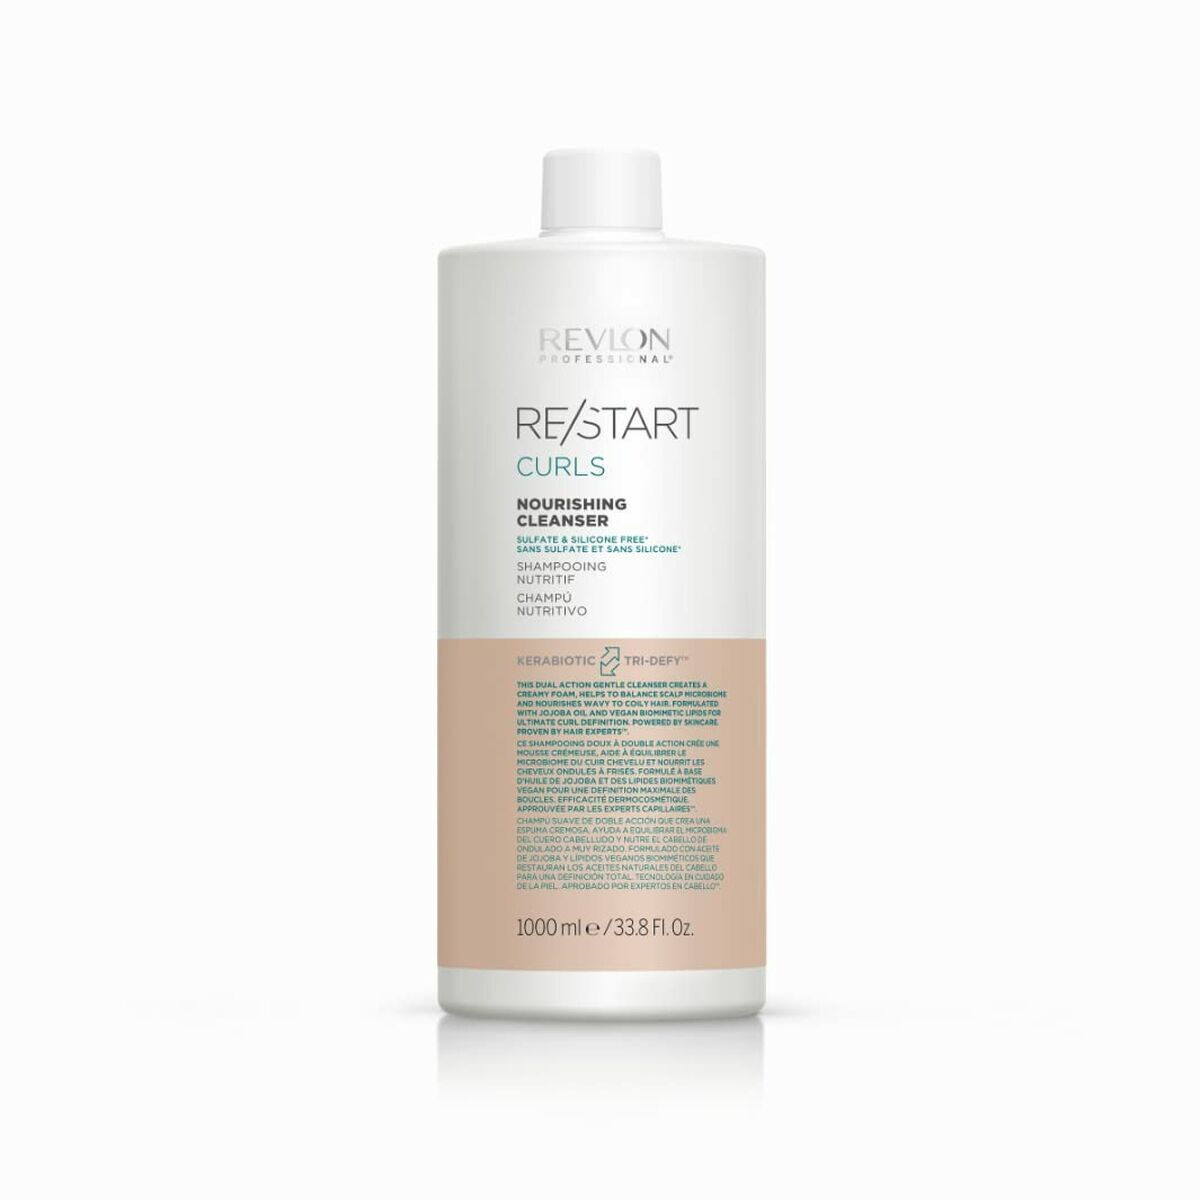 Smoothing for Restart Hair Revlon 1x1000ml Shampoos Curly